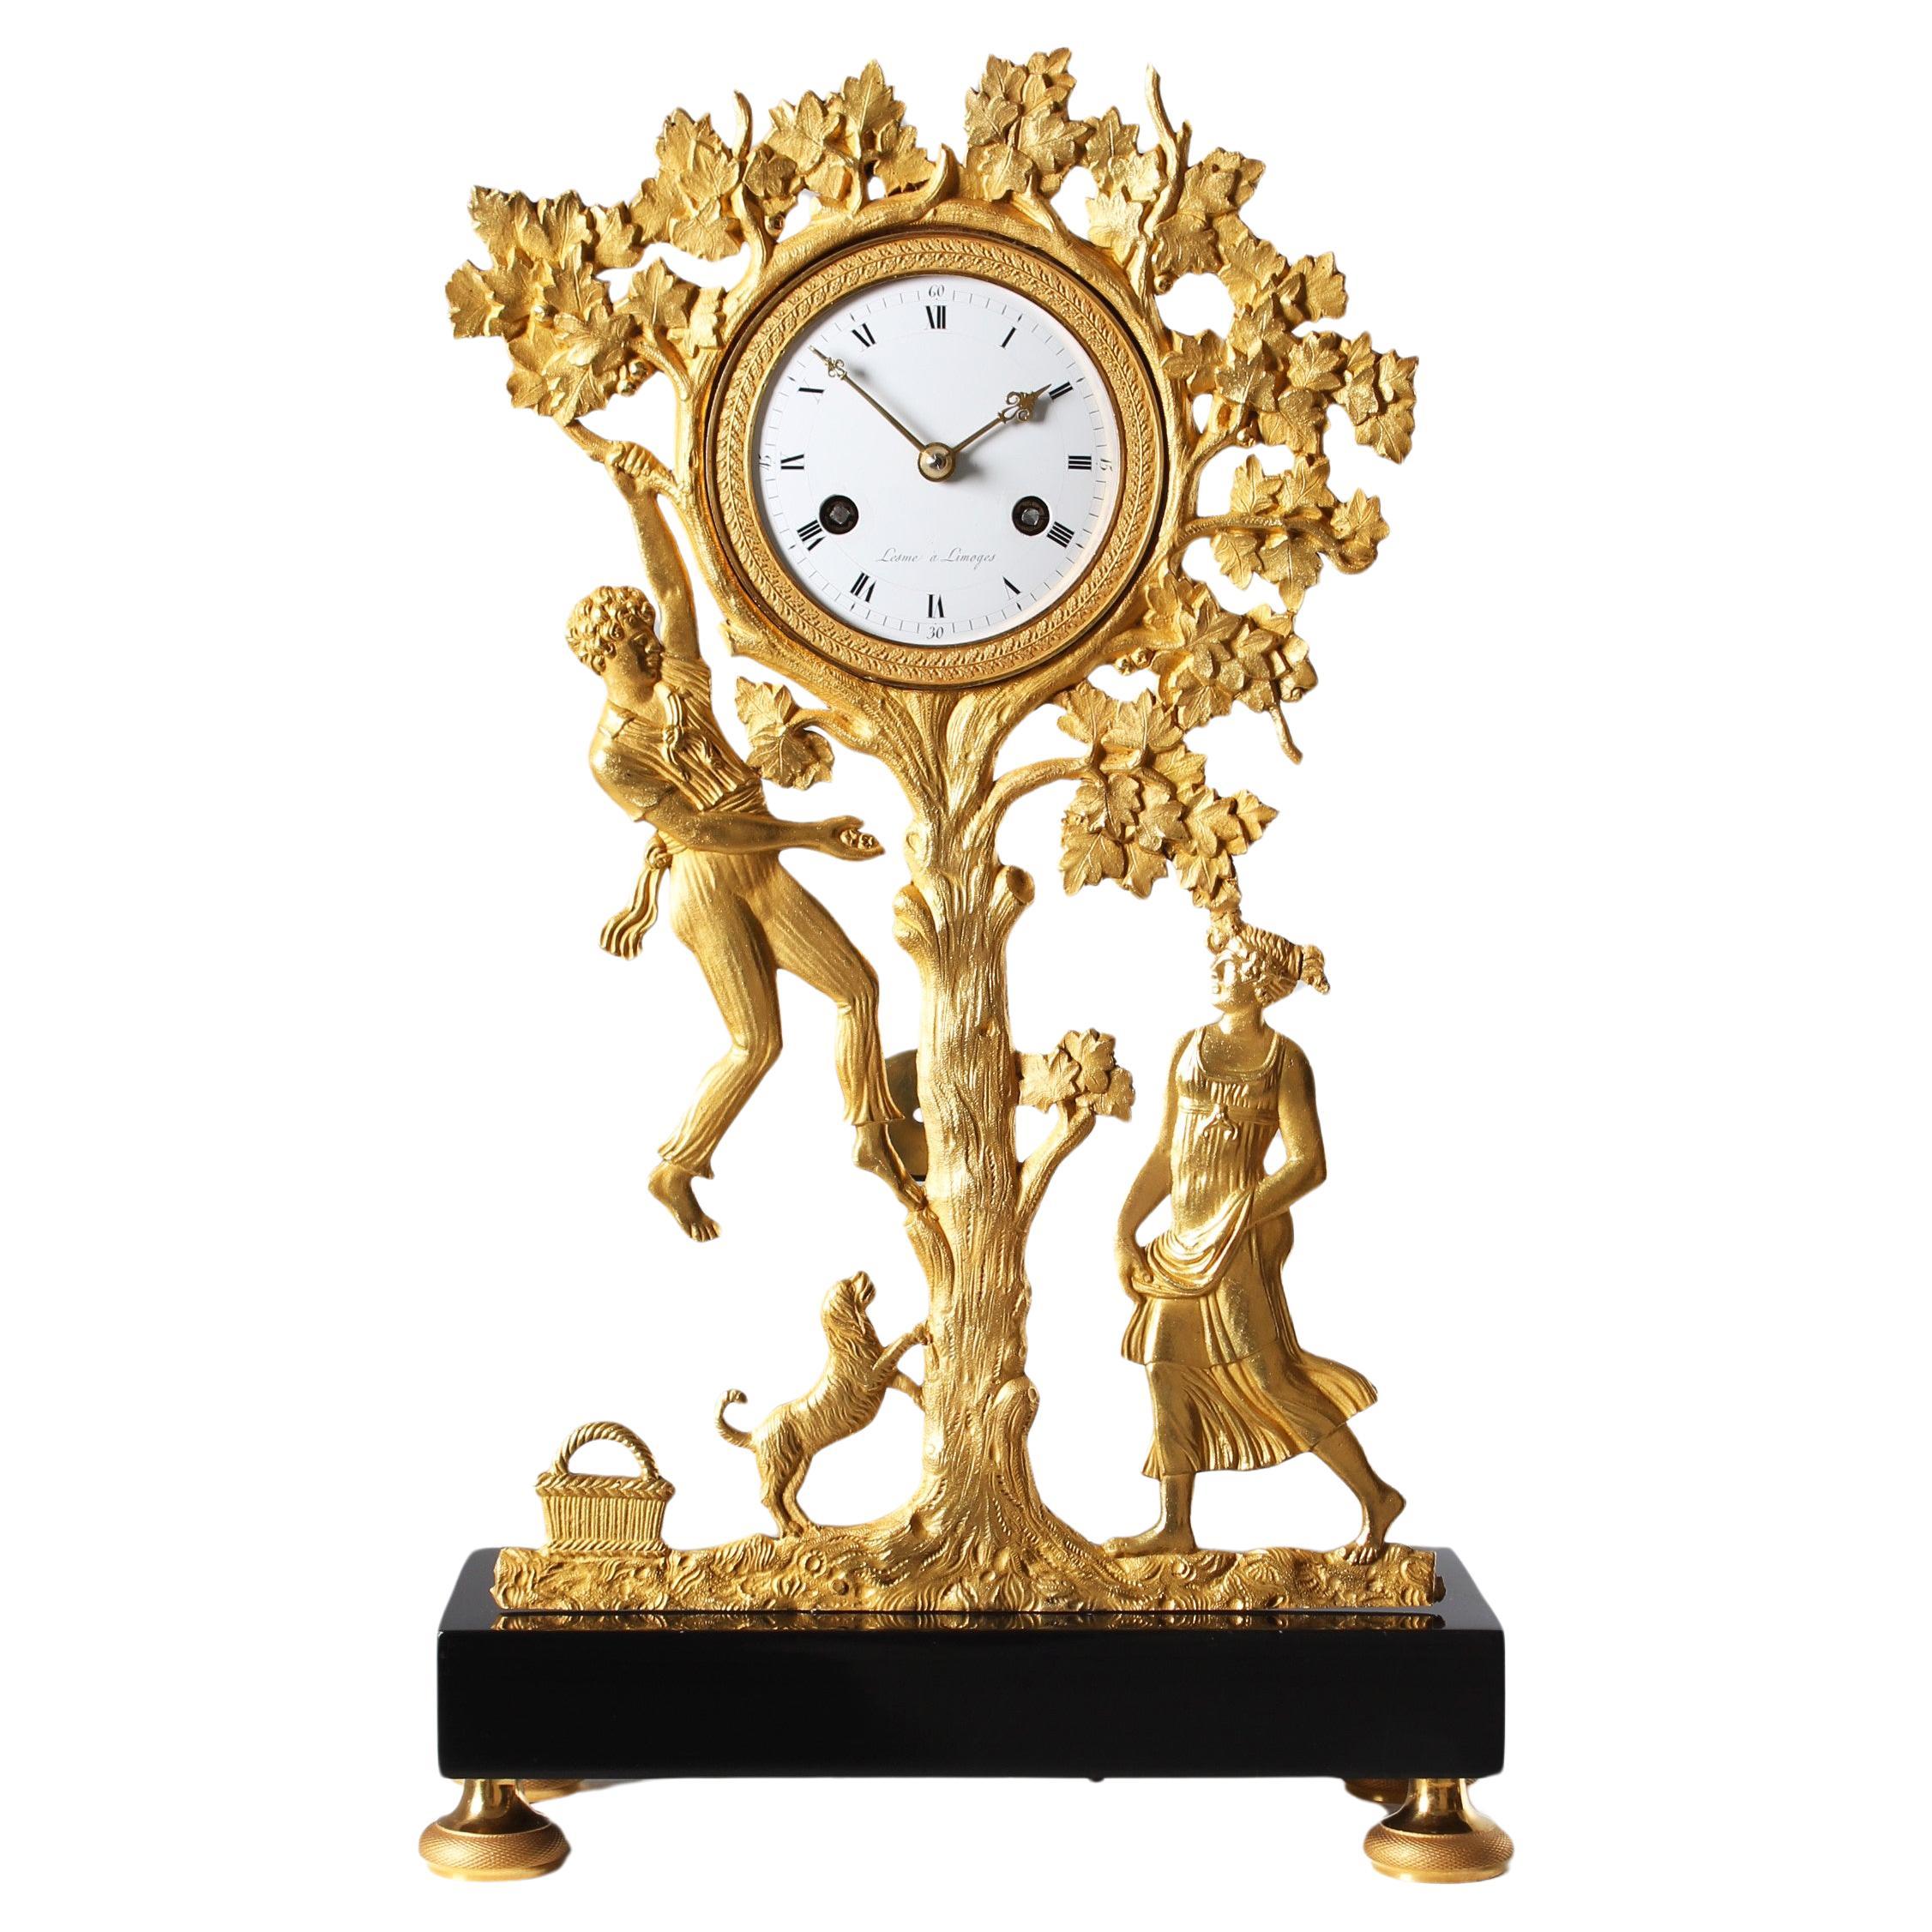 19th Century French Ormolu Mantel Clock, circa 1840